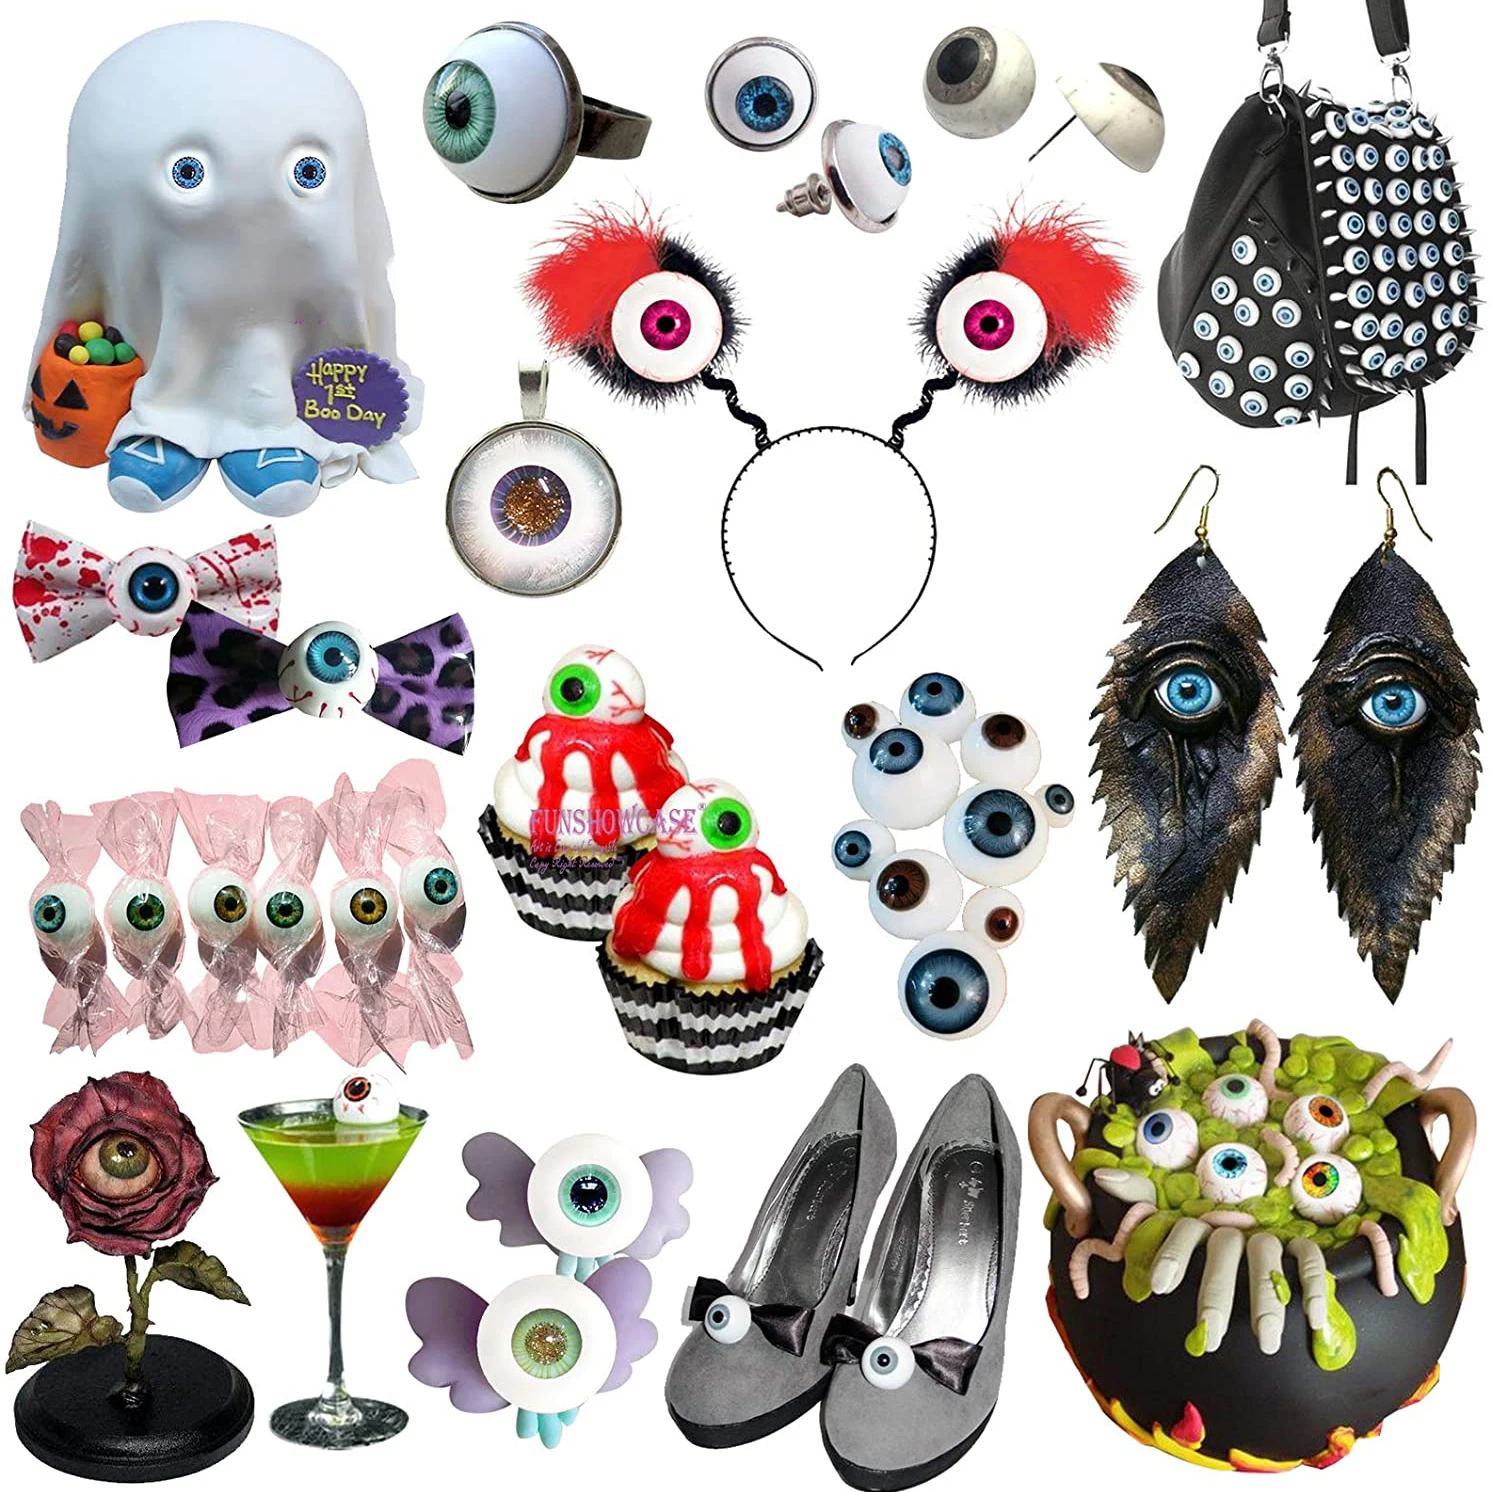 

6pcs/lot Handmade All Sizes Ball-Jointed Doll Eye Resin Mold Eyeballs Half Round Doll Eyes Resin Casting Mold Art Craft Tools